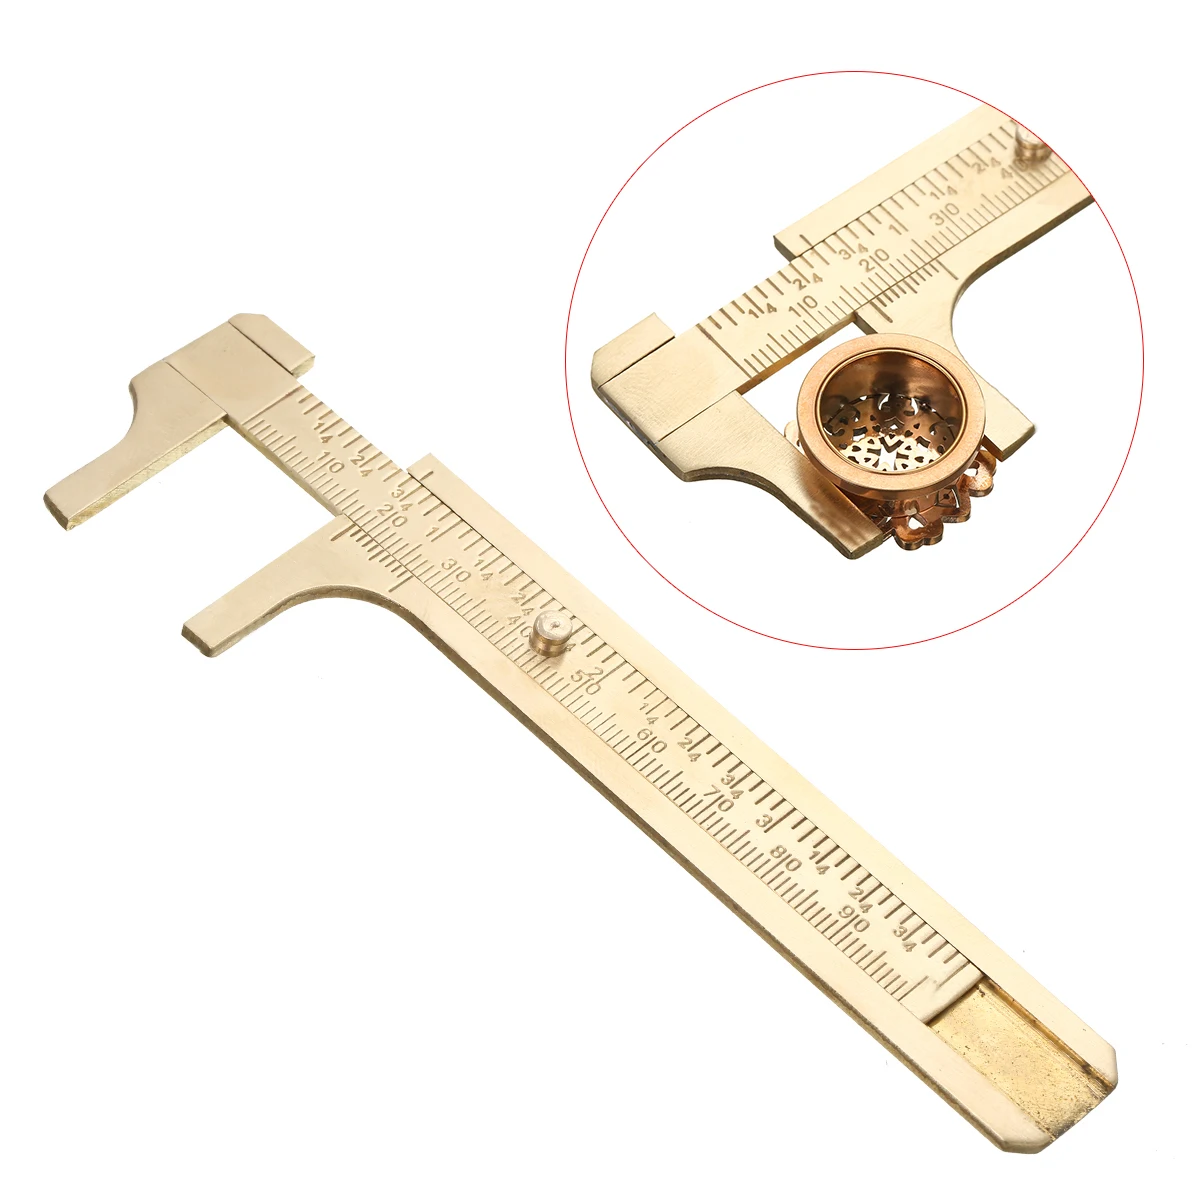 4 Inches Mini Brass Caliper Sliding Vernier Ruler Gauge Meters Tool Equipment 